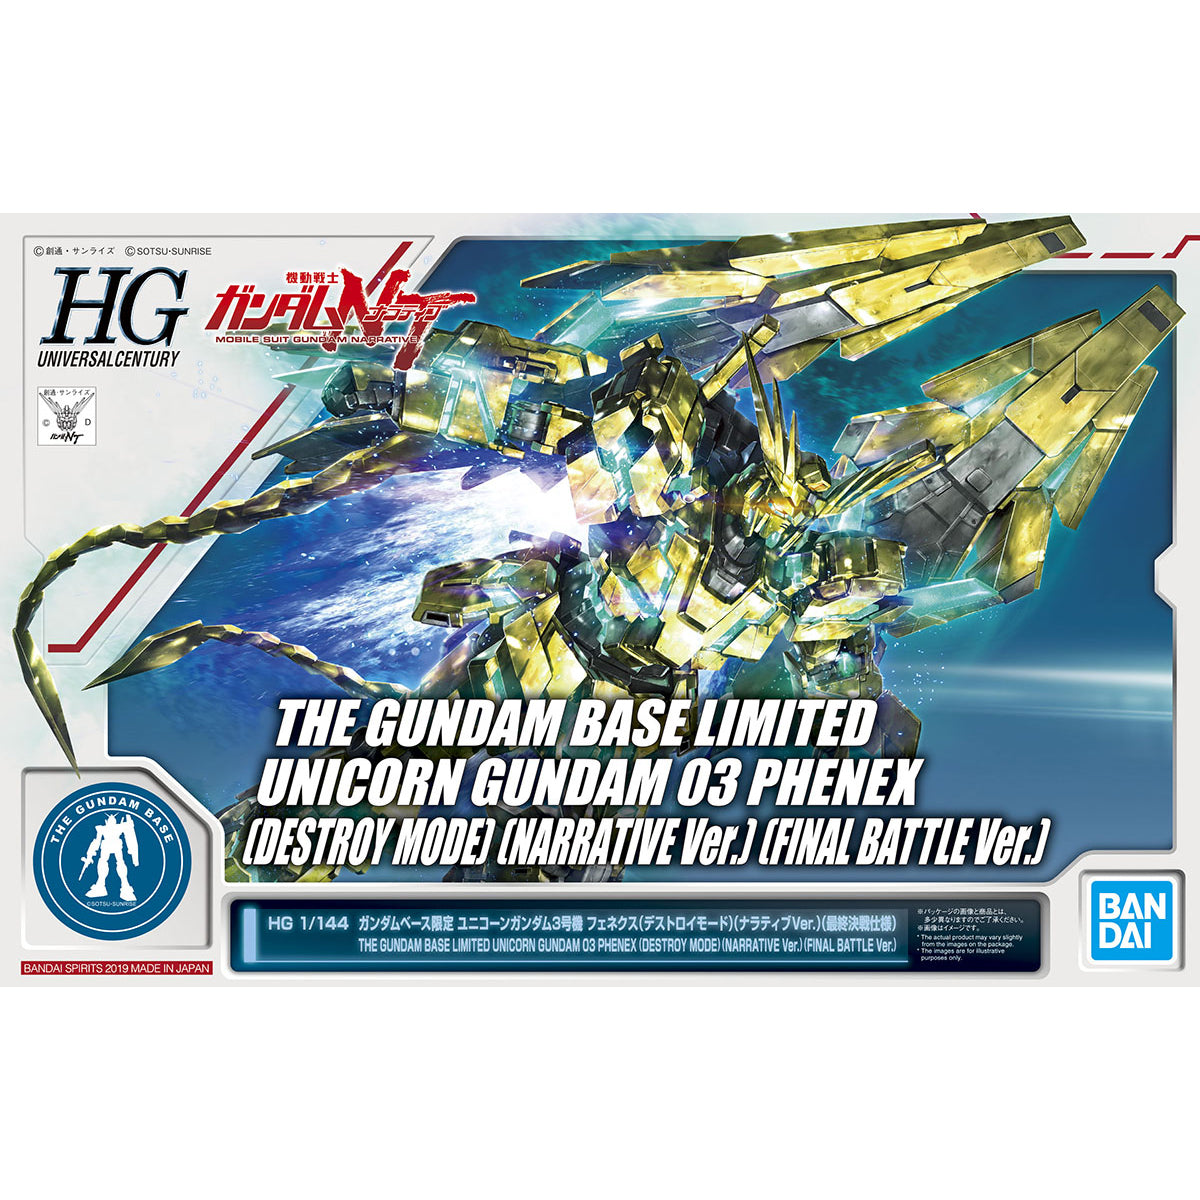 HG 1/144 Gundam Base Limited Unicorn Gundam Unit 3 Phenex (Destroy Mode) (Narrative Ver.) (Final Battle Ver.)